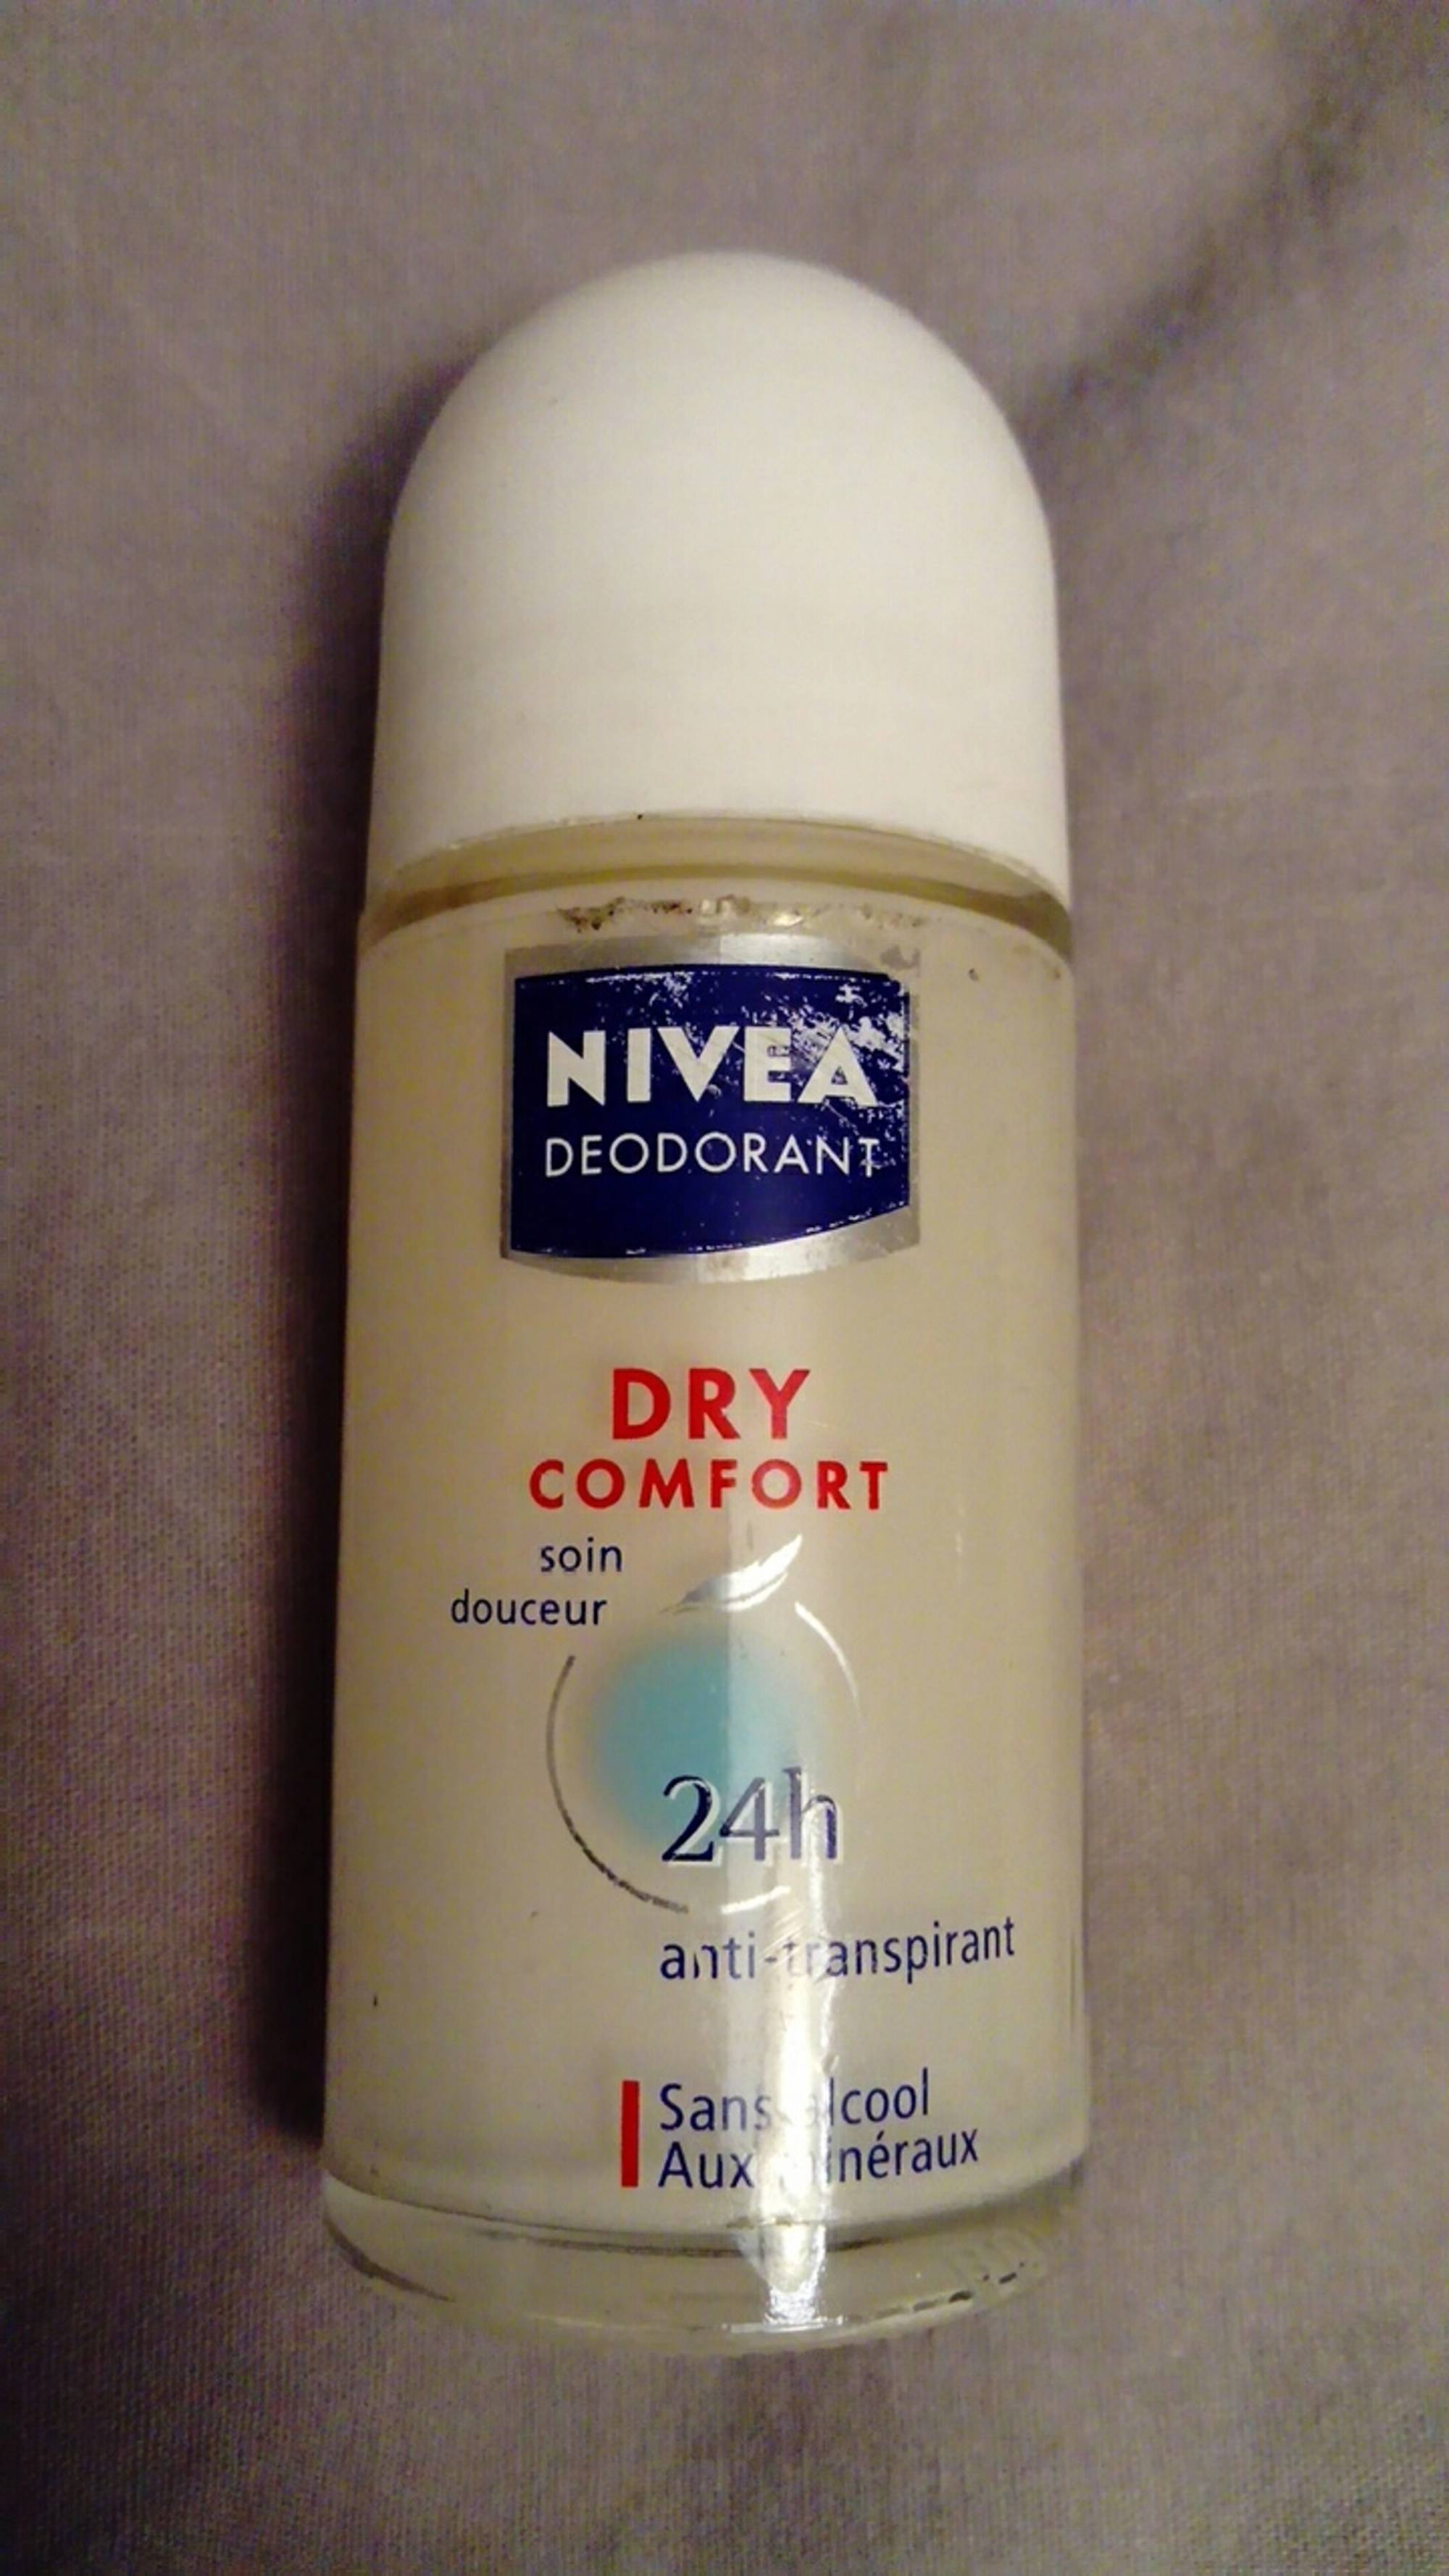 NIVEA - Dry comfort - Déodorant 24h anti-transpirant